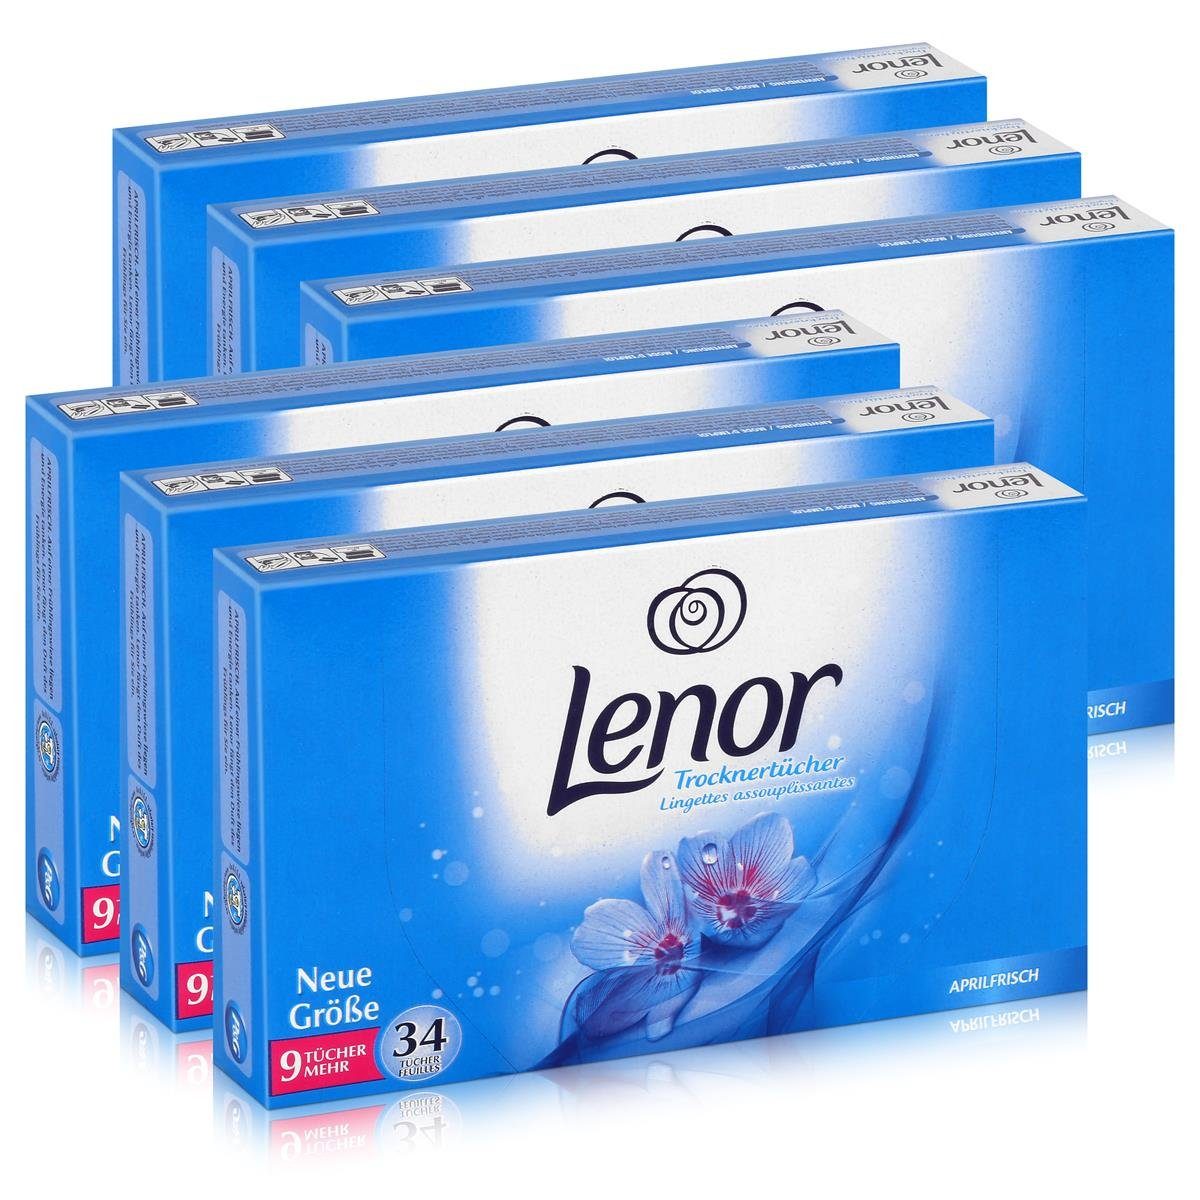 LENOR Lenor Trocknertücher Aprilfrisch 34 Tücher - Wäschepflege im Trockner Spezialwaschmittel | Waschmittel